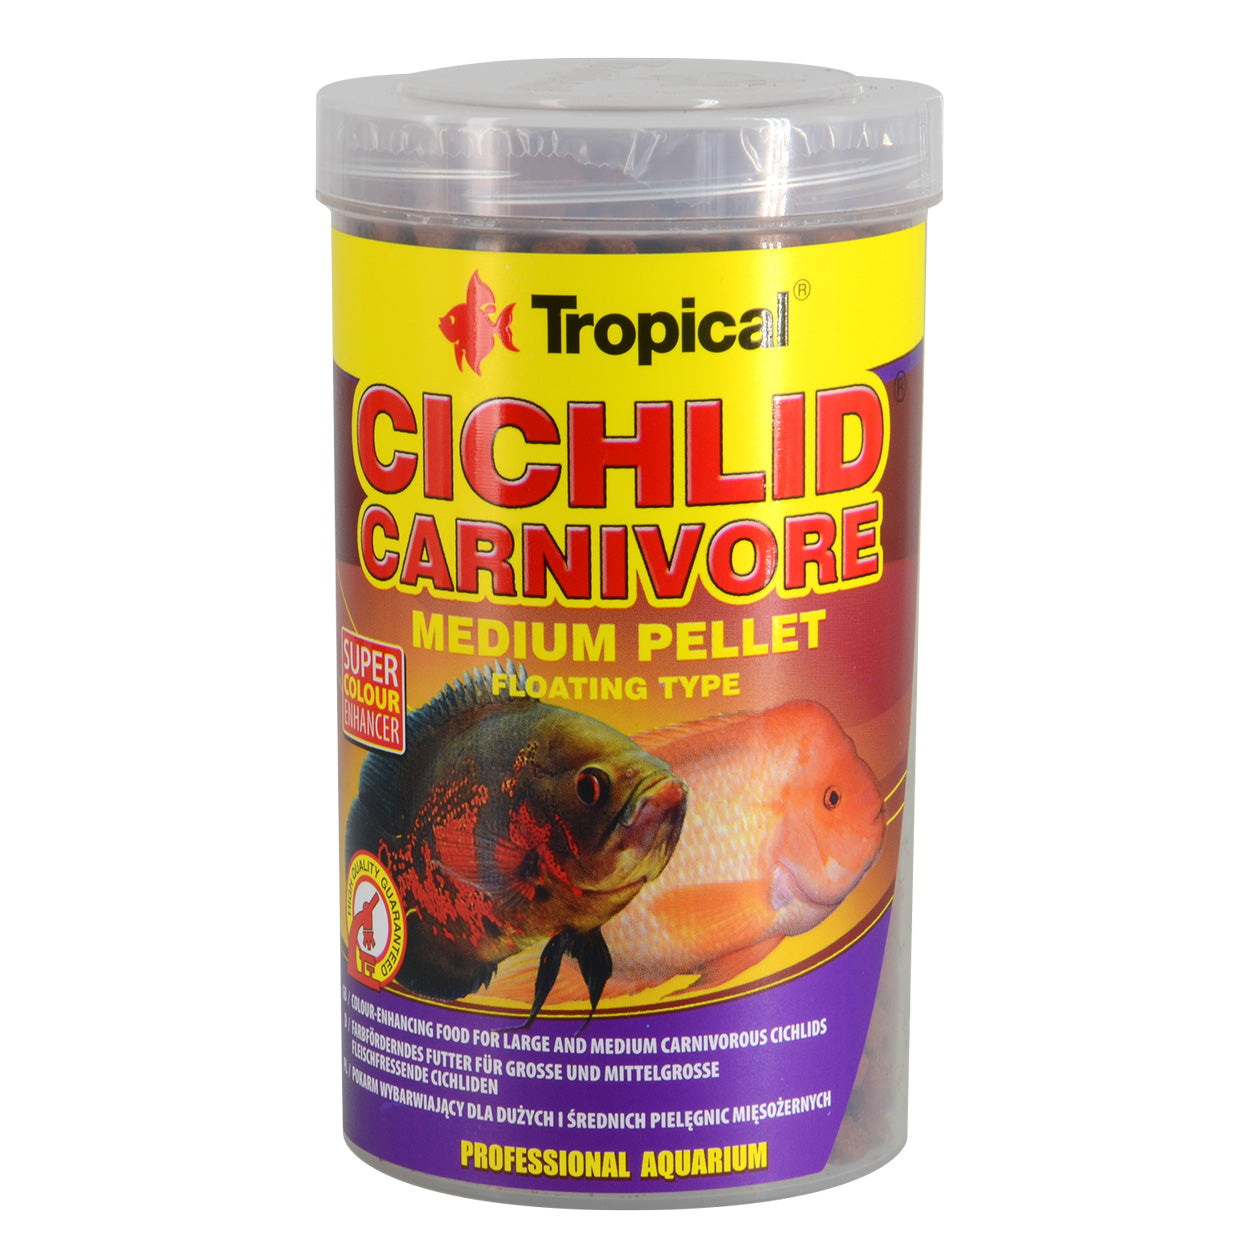 Tropical Cichlid Carnivore Medium Pellet - Floating